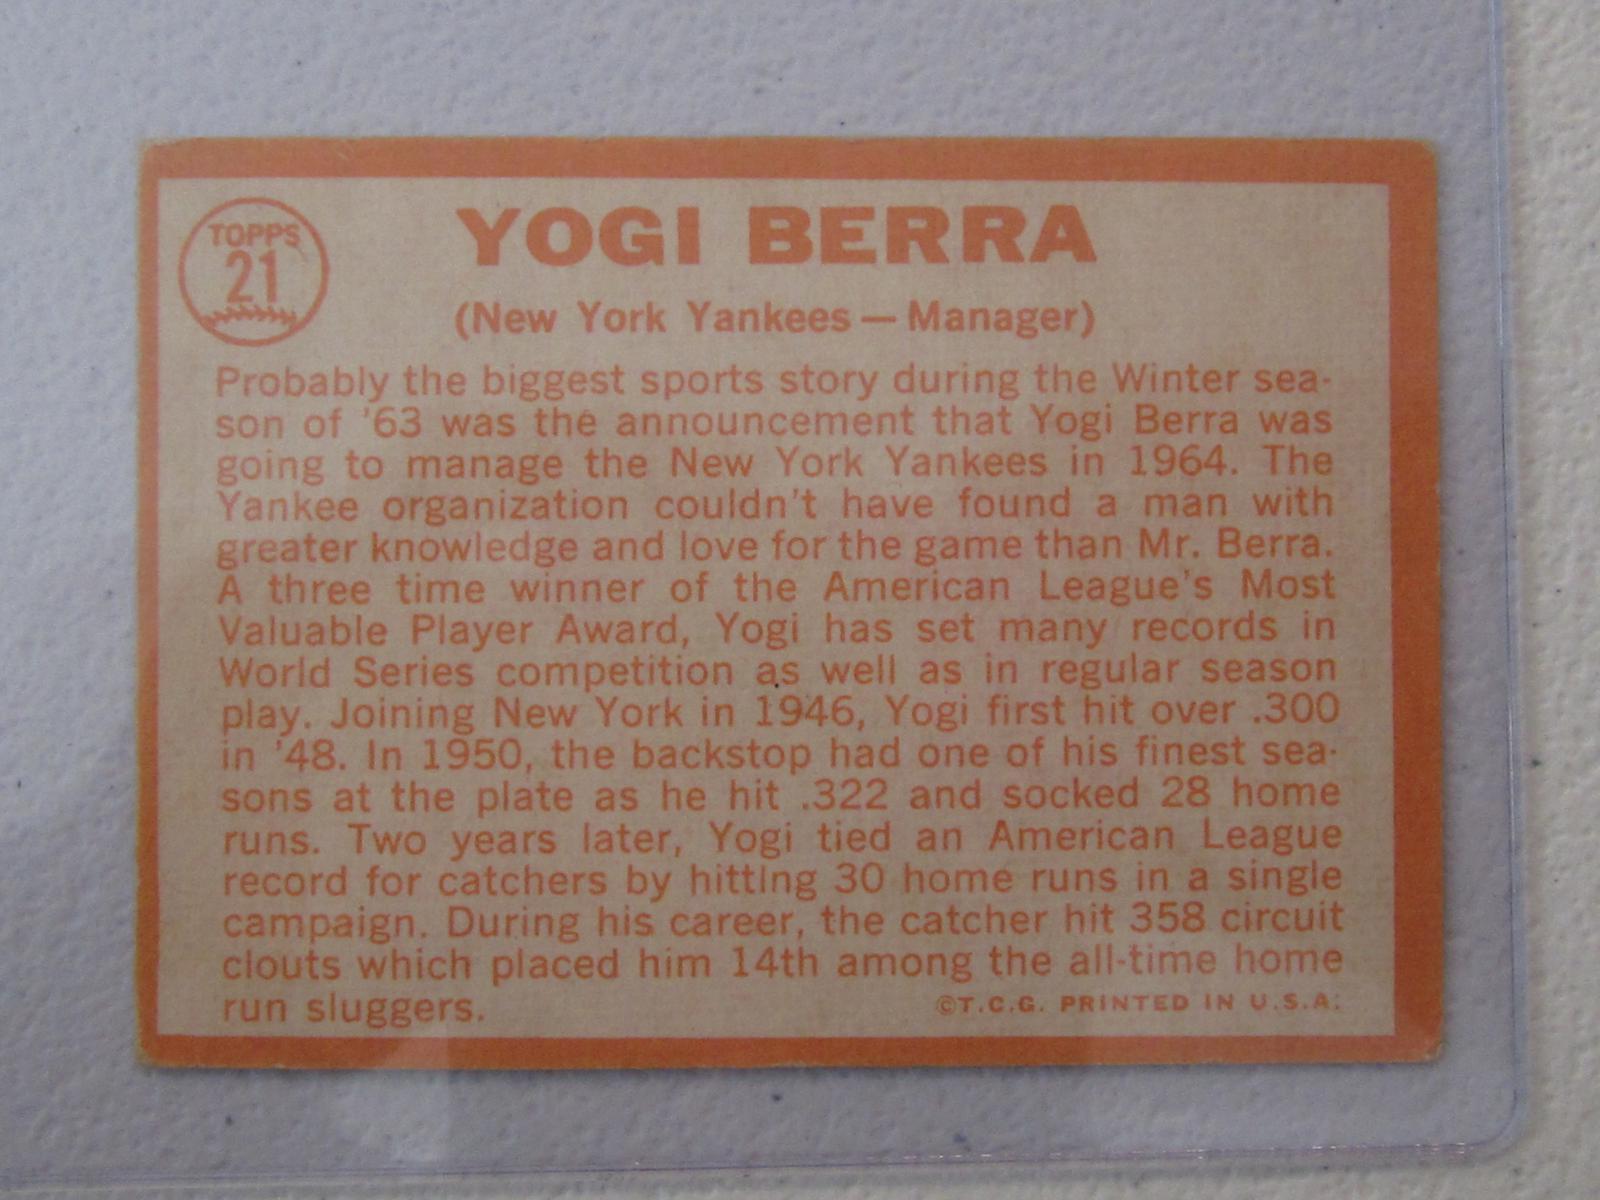 1964 TOPPS YOGI BERRA NO21 VINTAGE